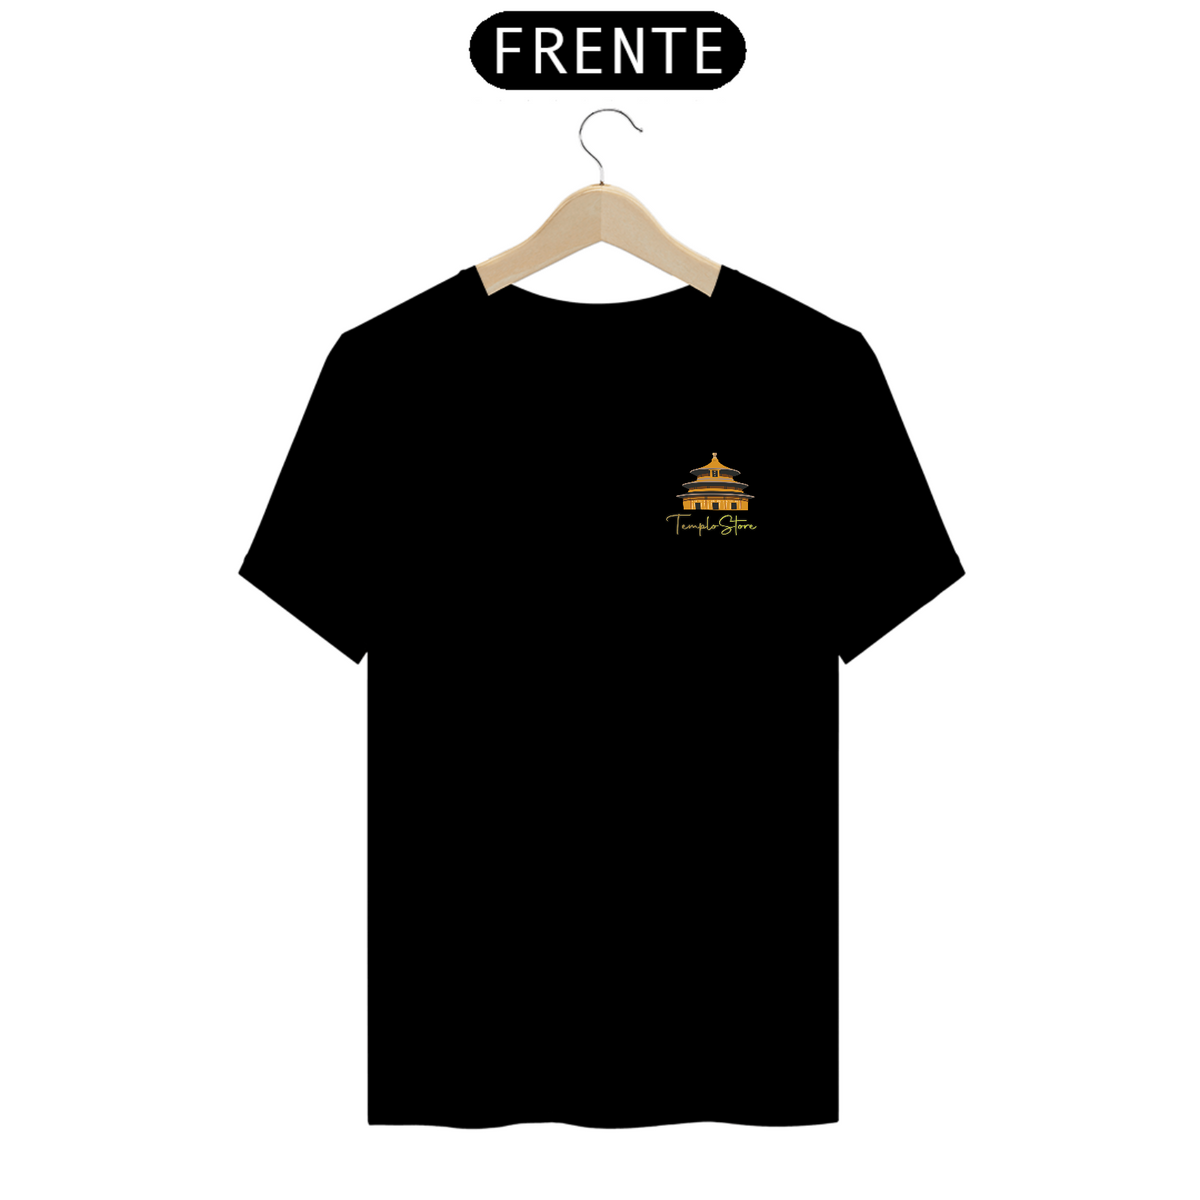 Nome do produto: Camisa Oficial - Templo Store